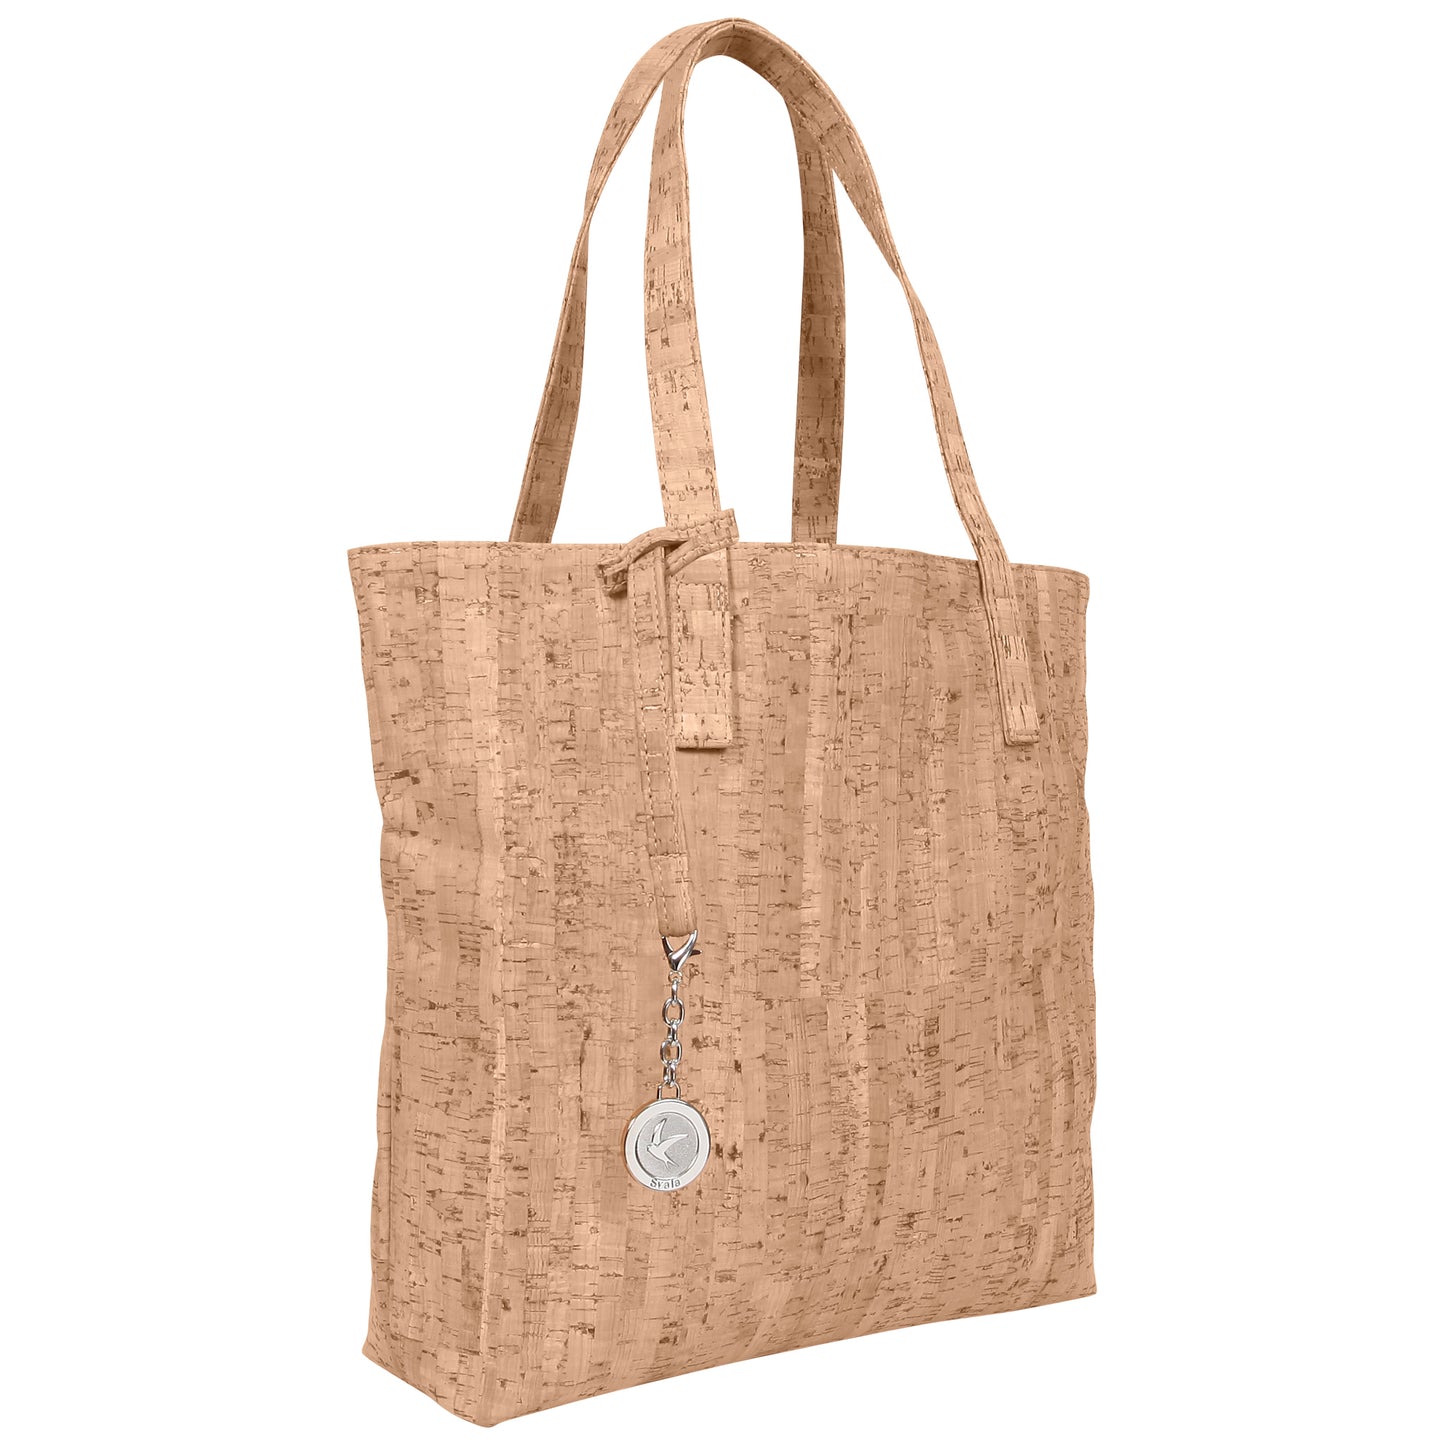 Svala Simma luxury vegan tote handbag in natural cork